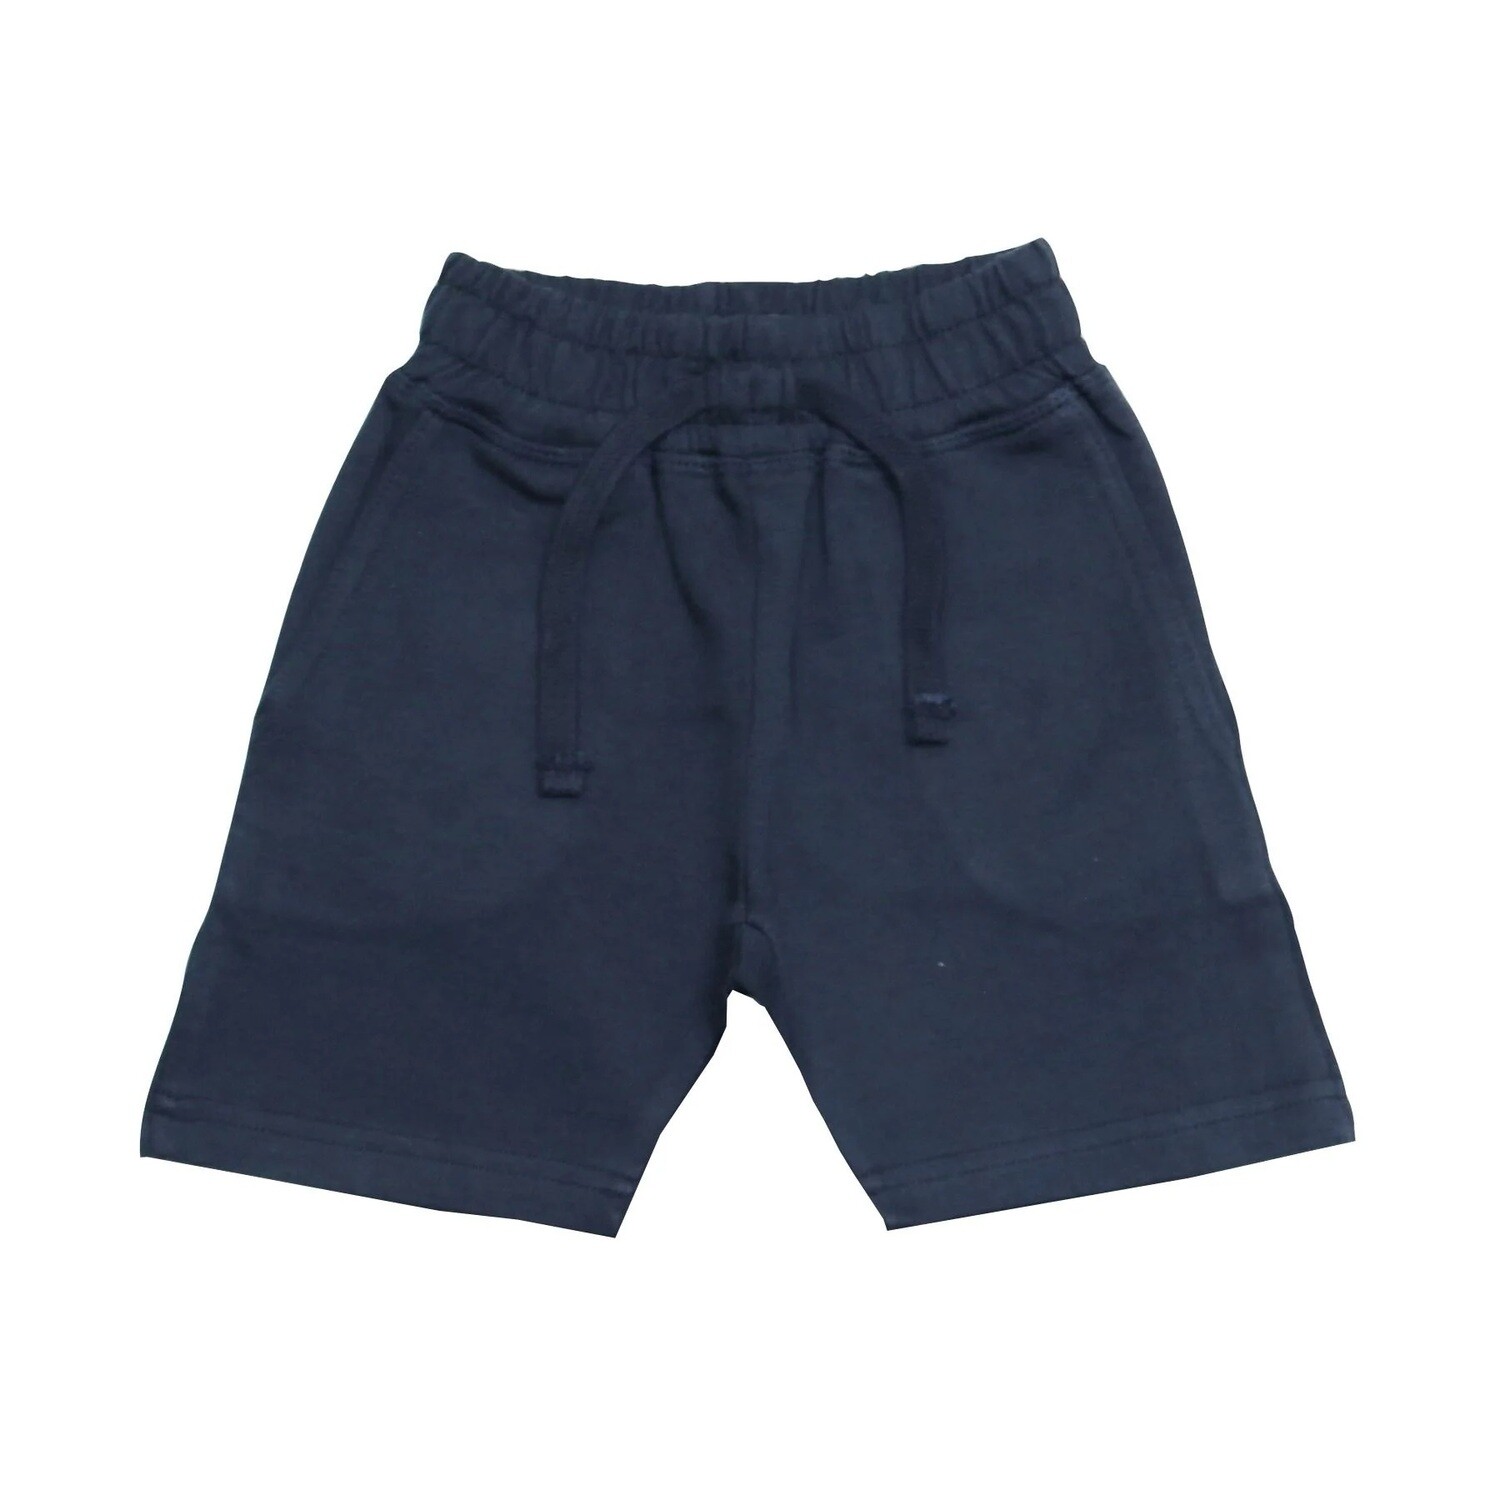 Mish Boys Comfy Shorts-Navy